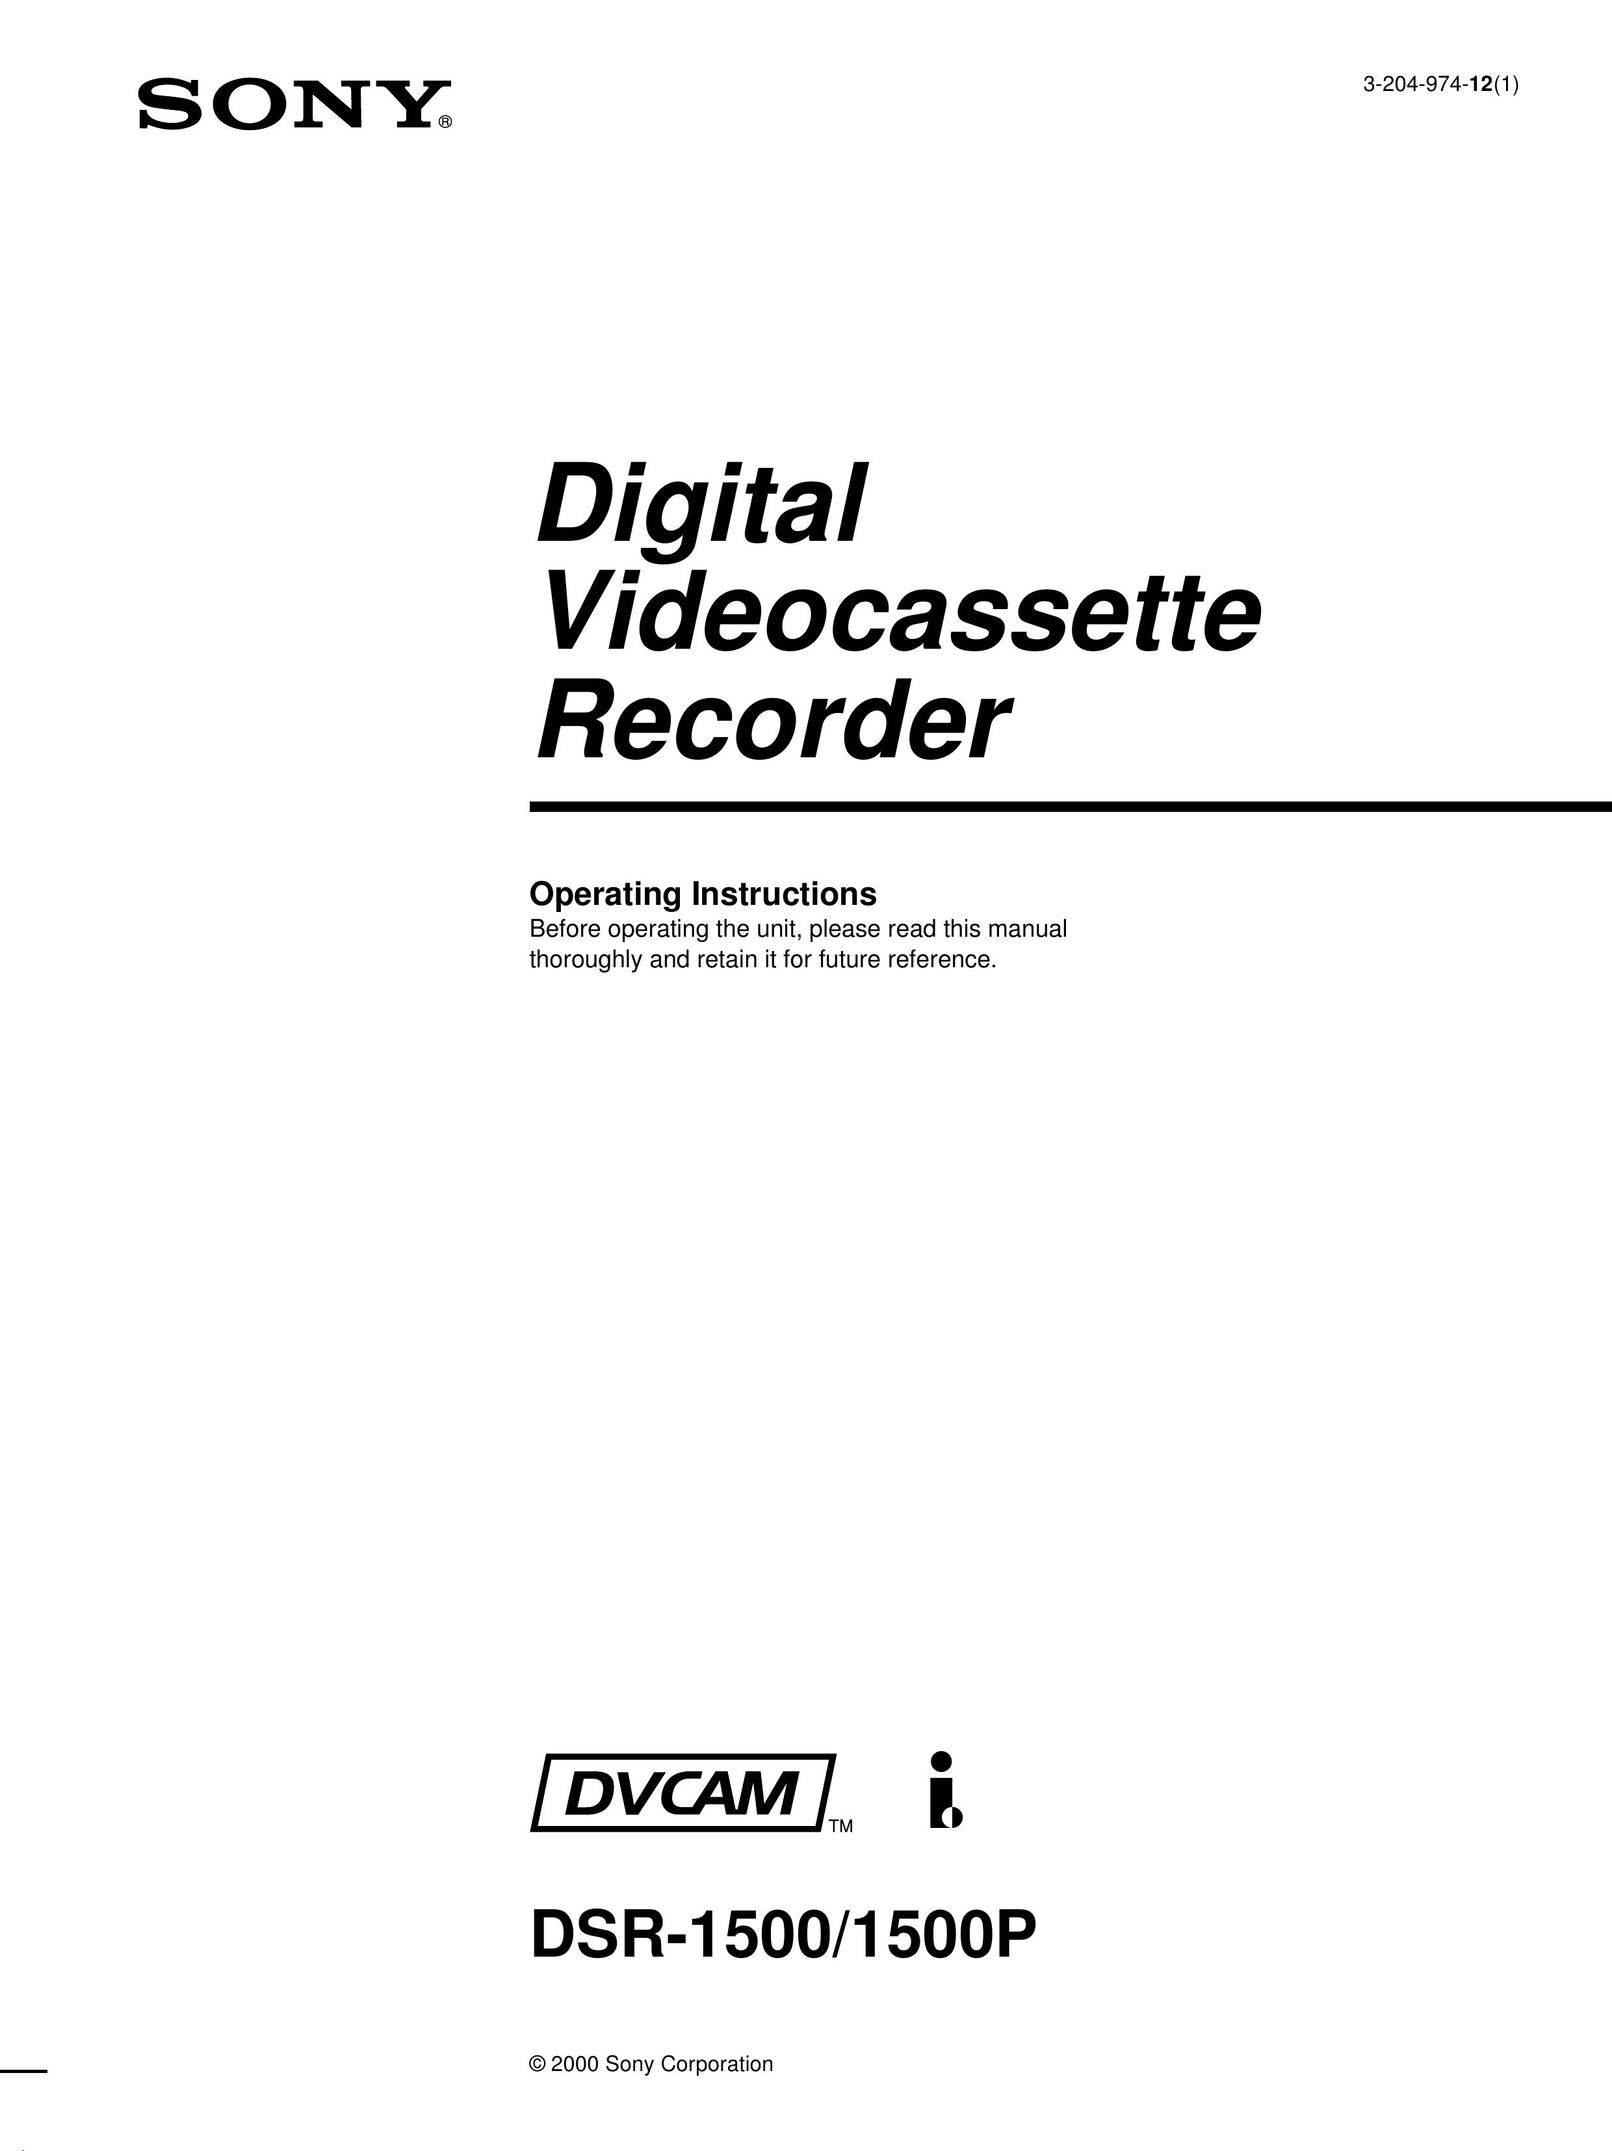 Sony DSR-1500 VCR User Manual